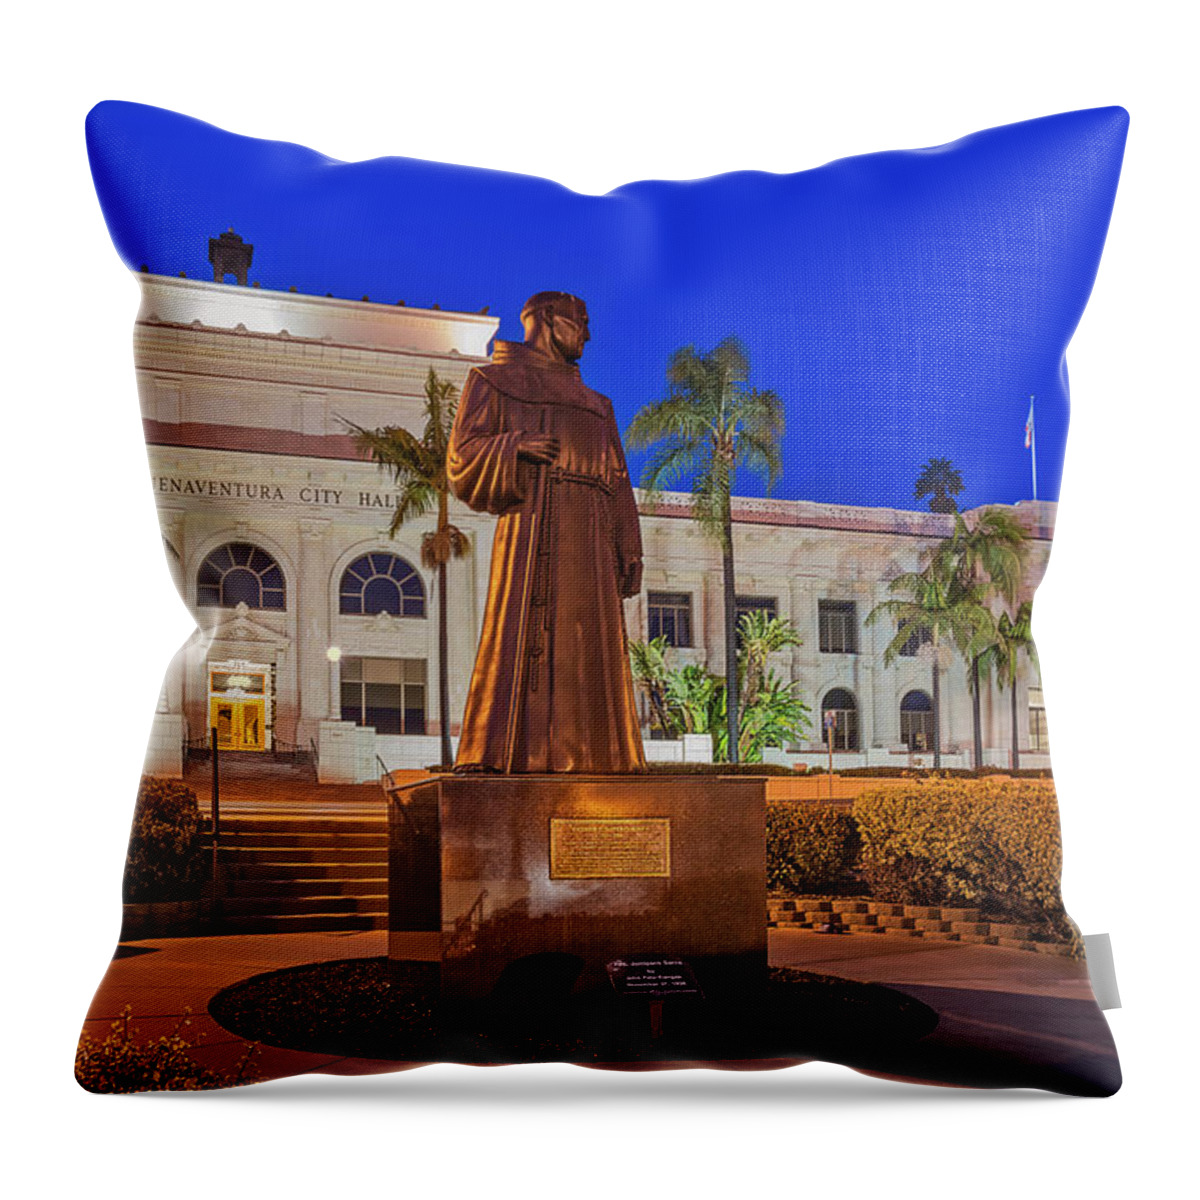 Ventura City Hall Throw Pillow featuring the photograph San Buenaventura City Hall by Susan Candelario